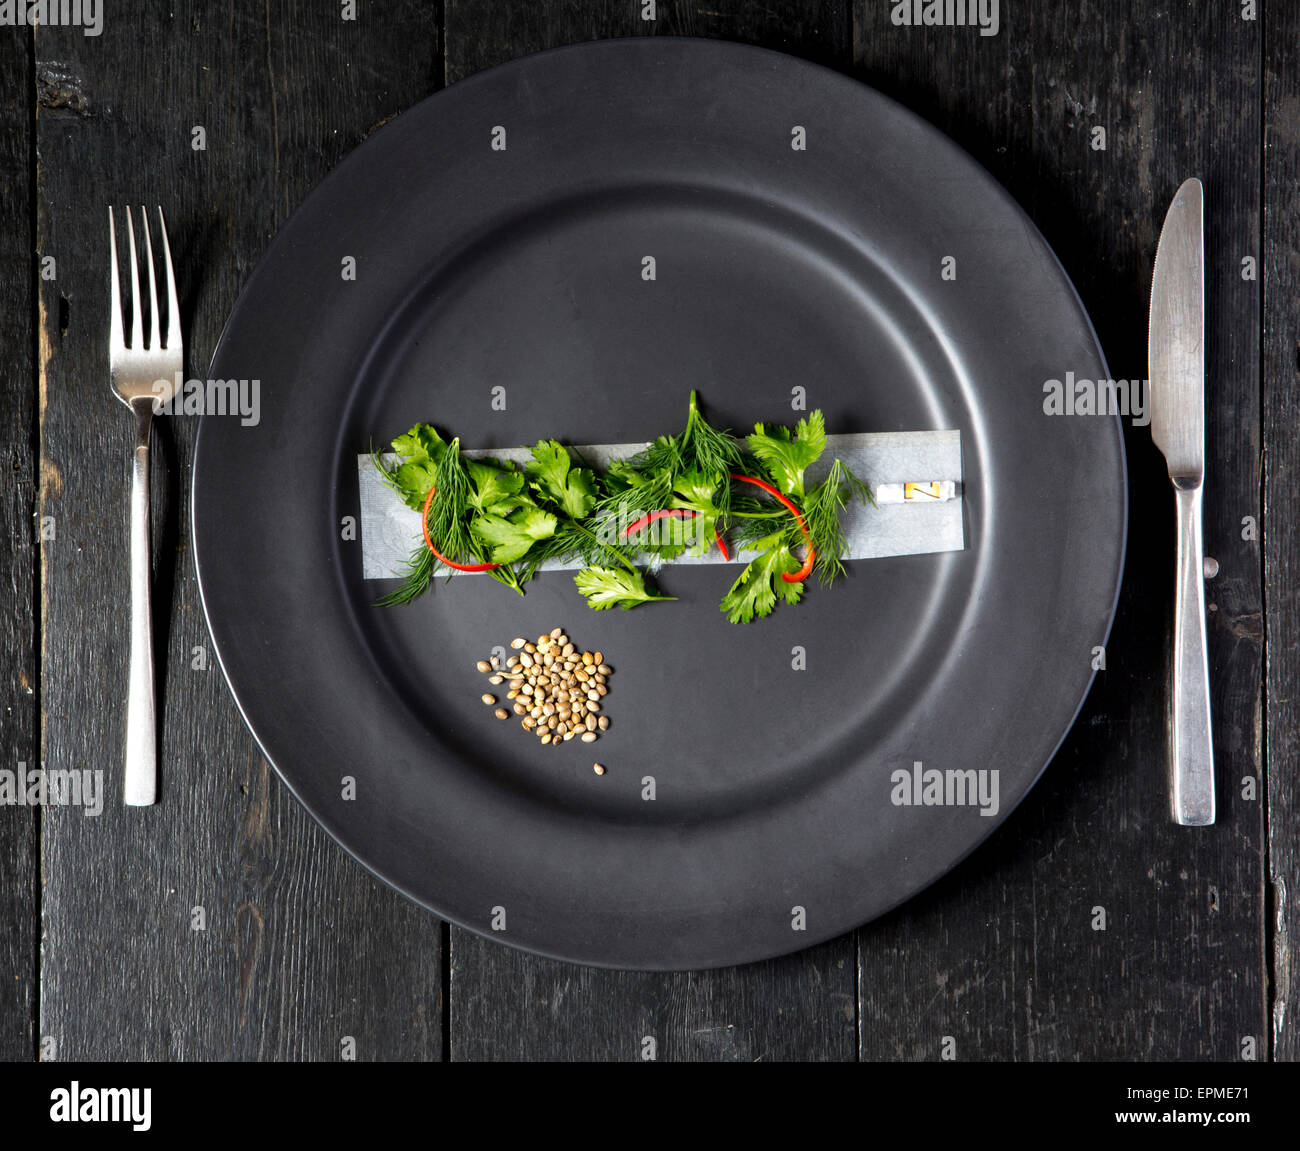 Humorous depiction of a hemp inspired meal featuring hemp seeds, coriander, rizlas. Stock Photo